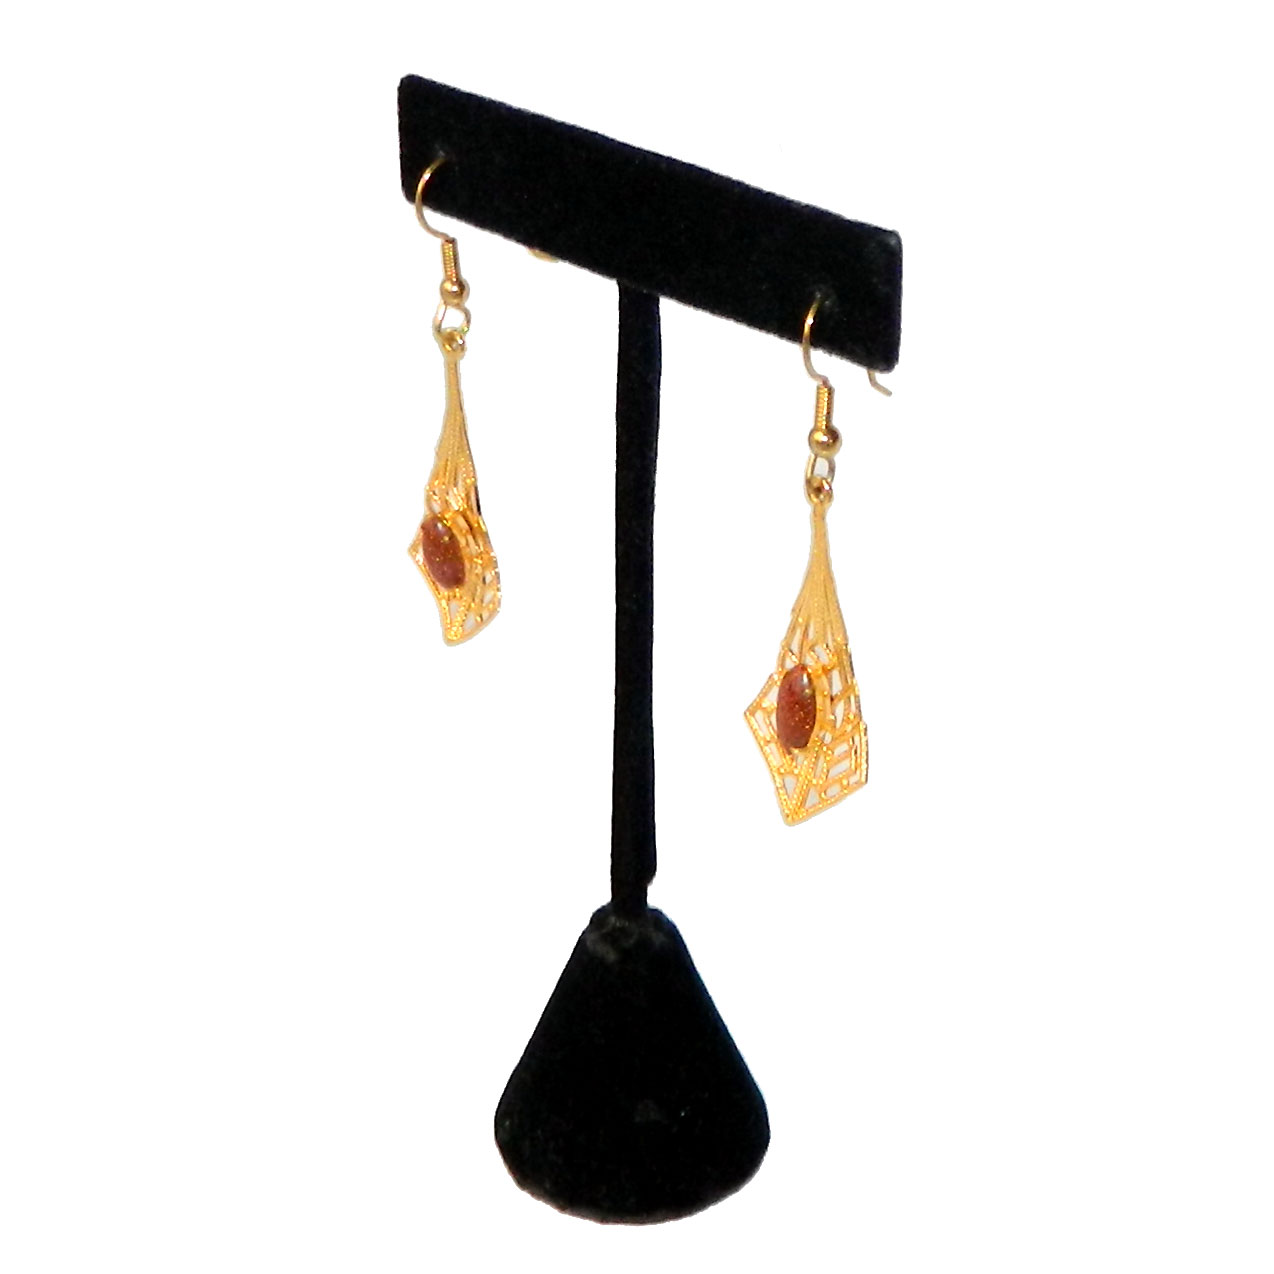 Victorian revival drop earrings